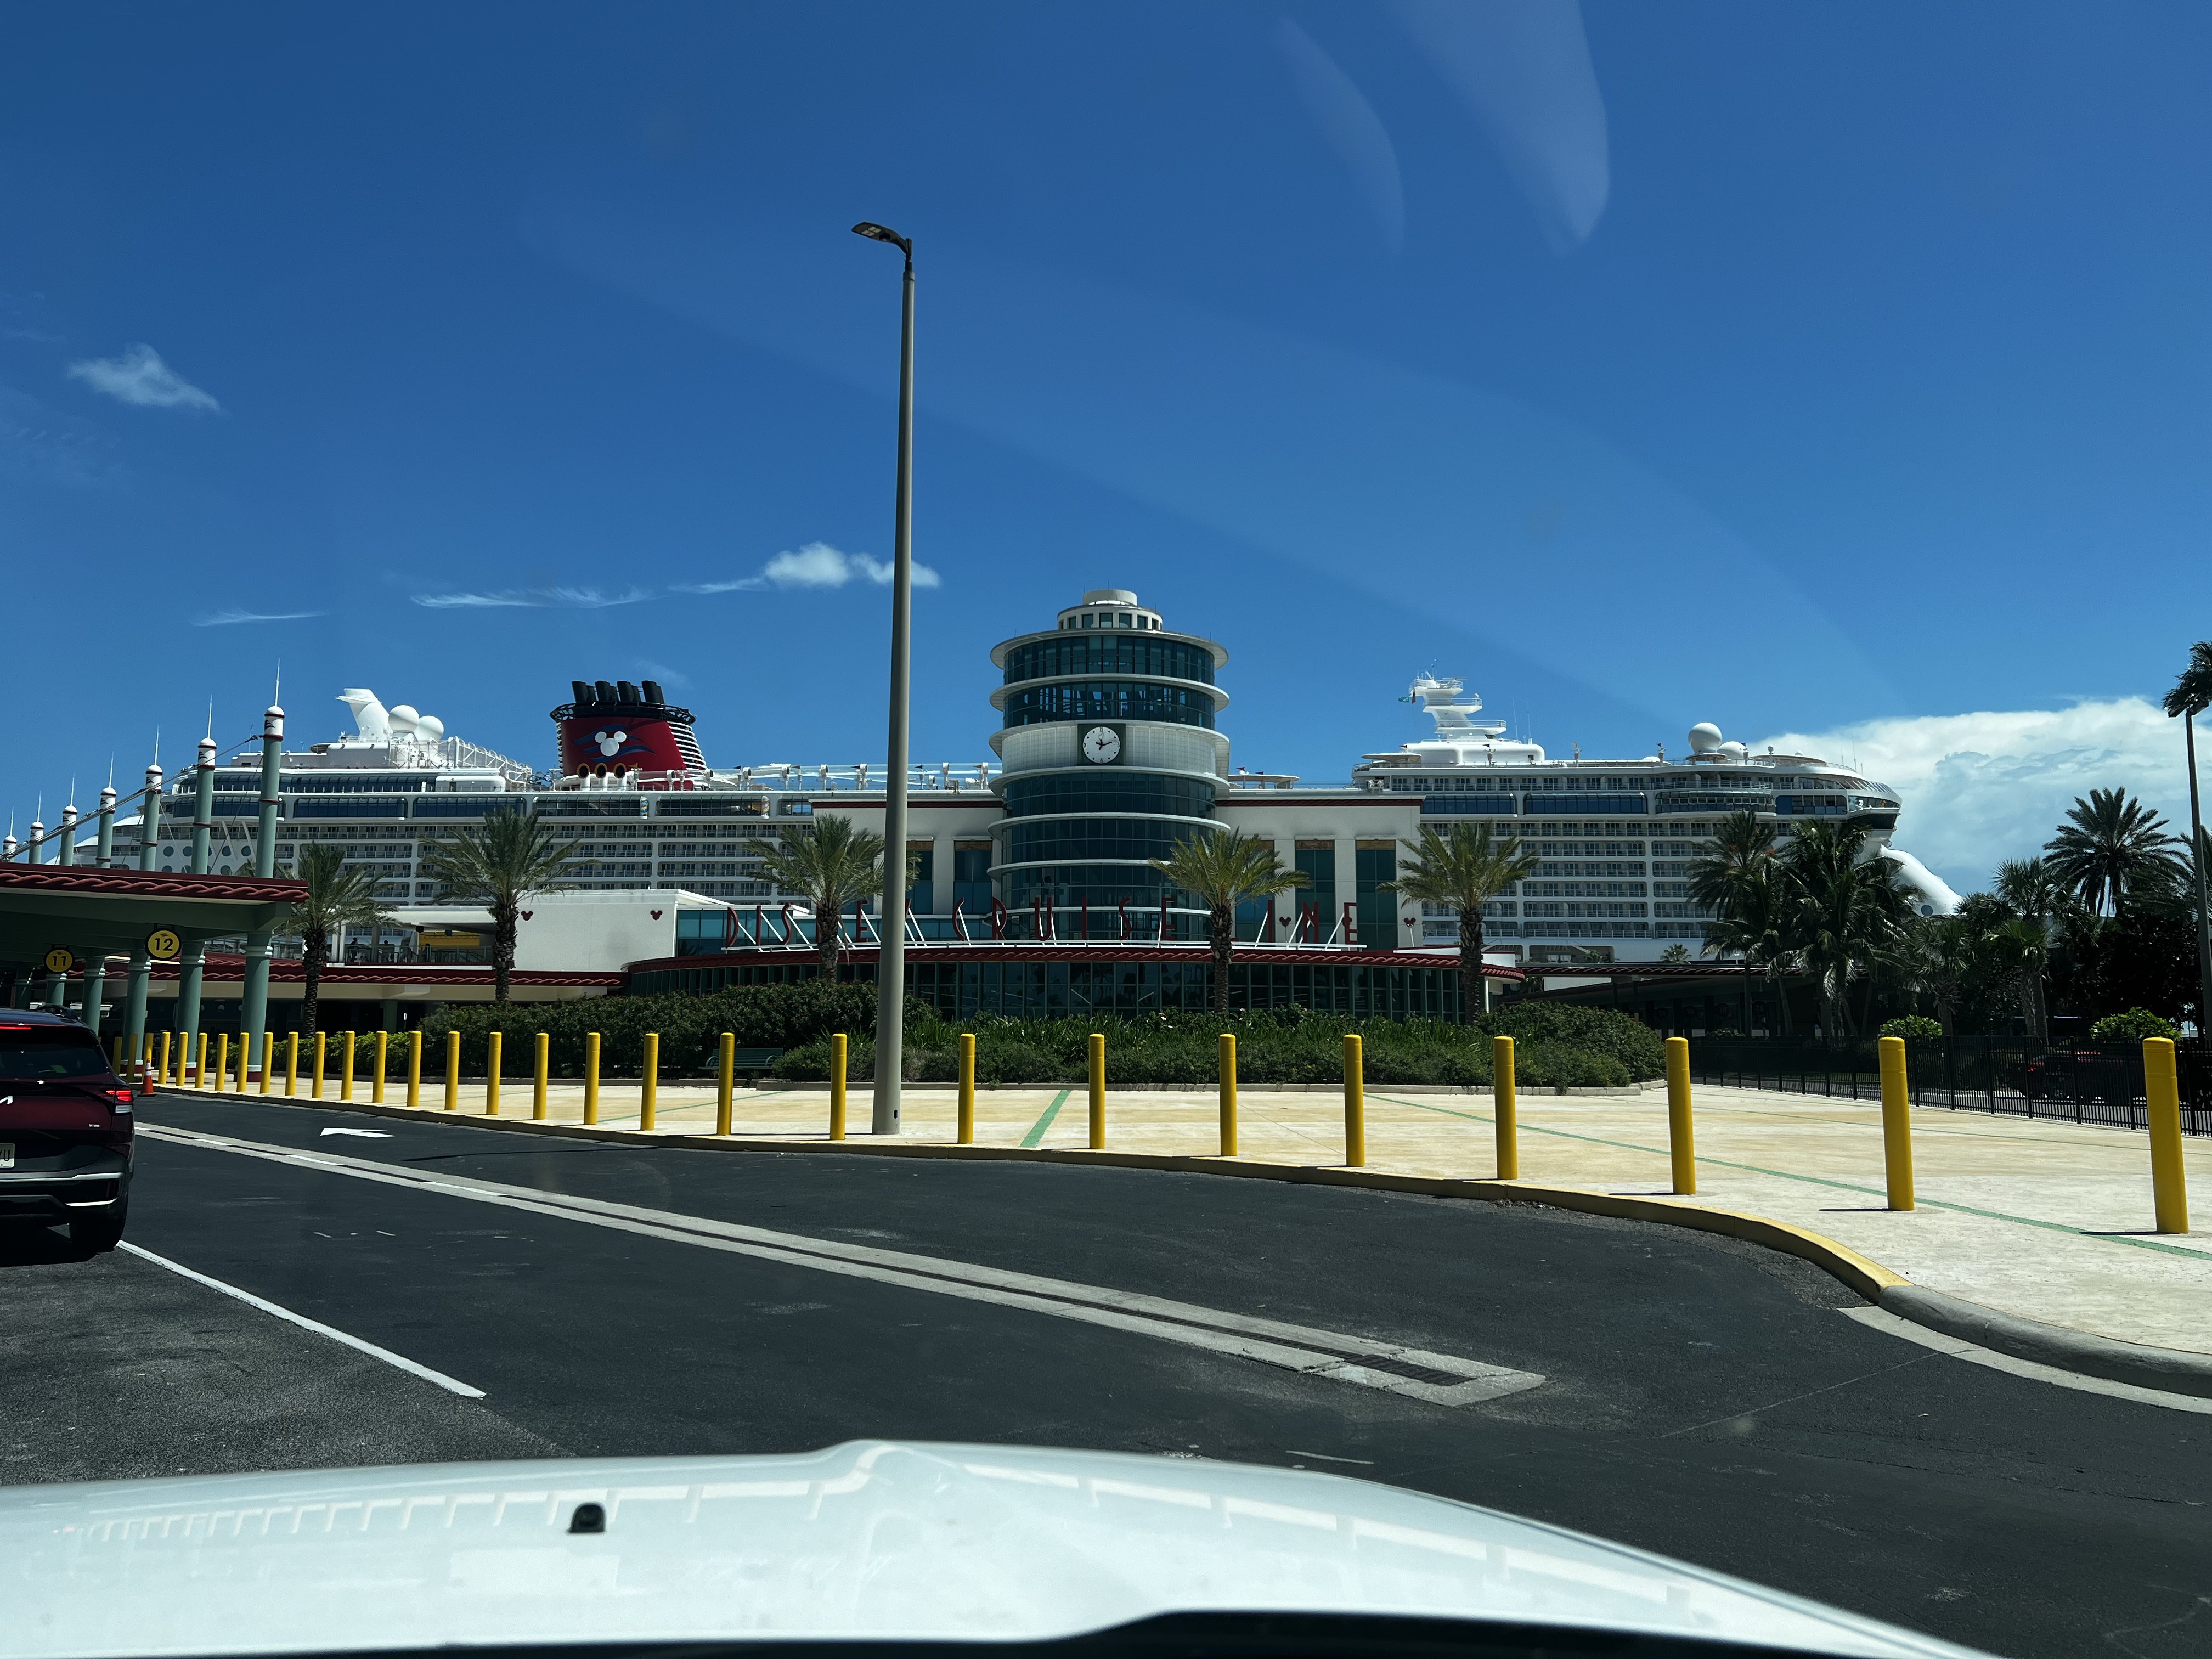 disney fantasy cruise ship at port